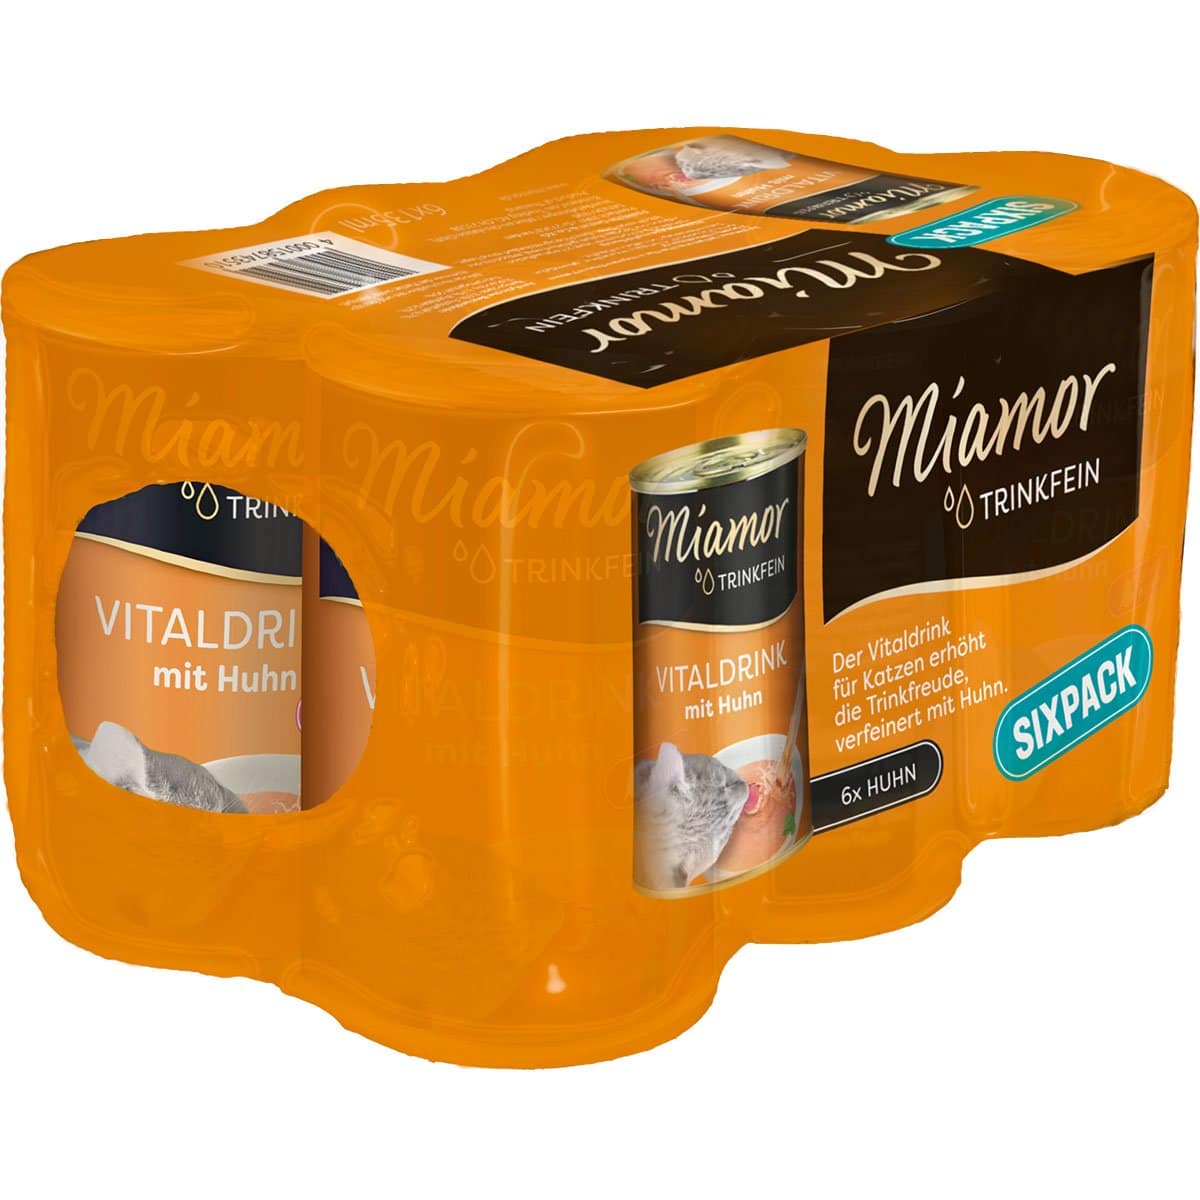 Miamor Trinkfein - Vitaldrink mit Huhn Sixpack 24x135ml